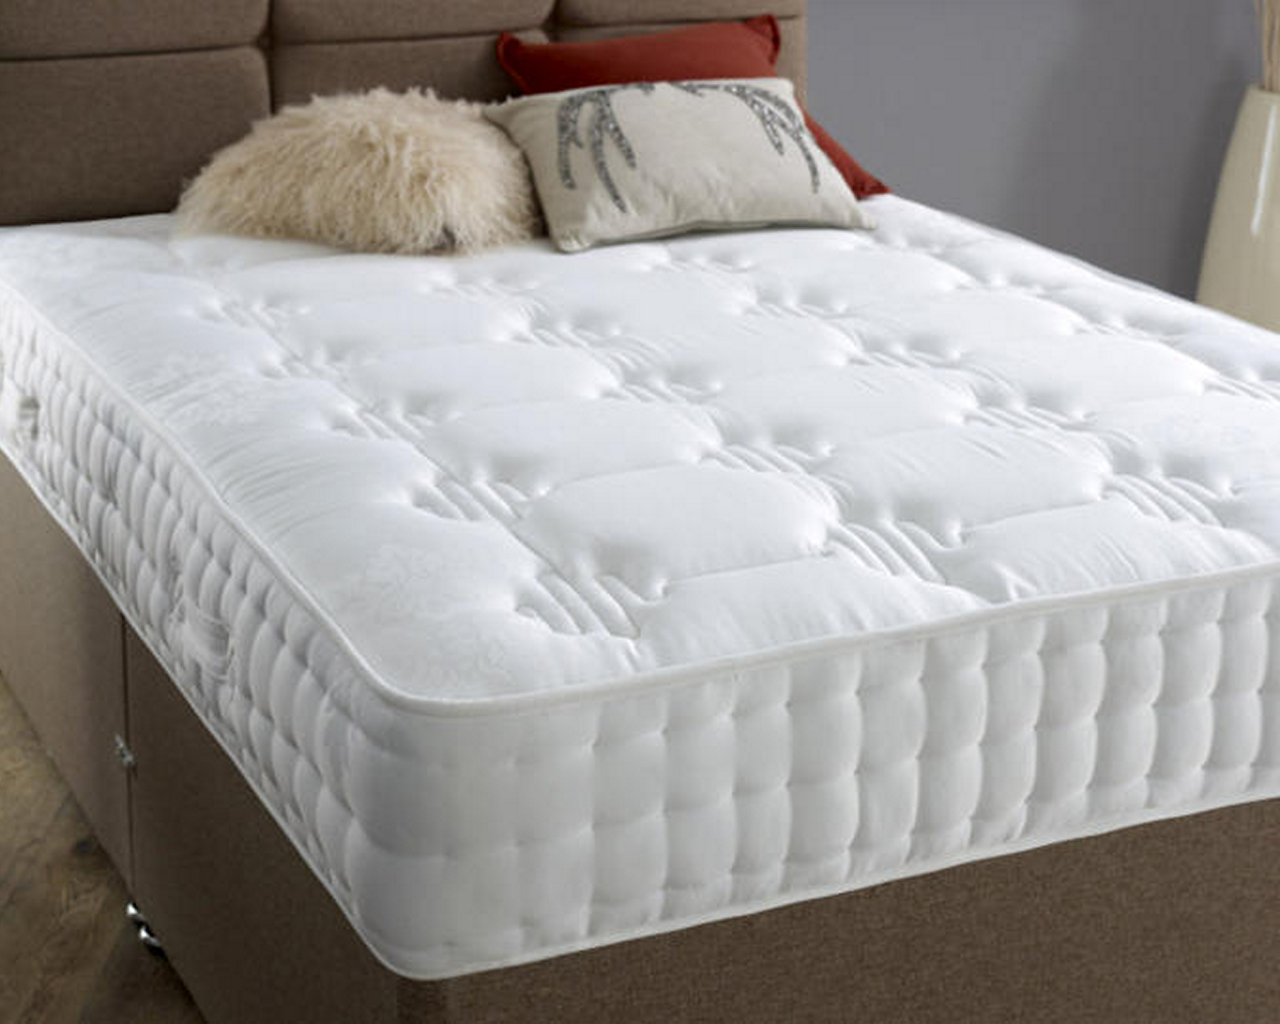 hilton hotel & home superior mattress topper reviews